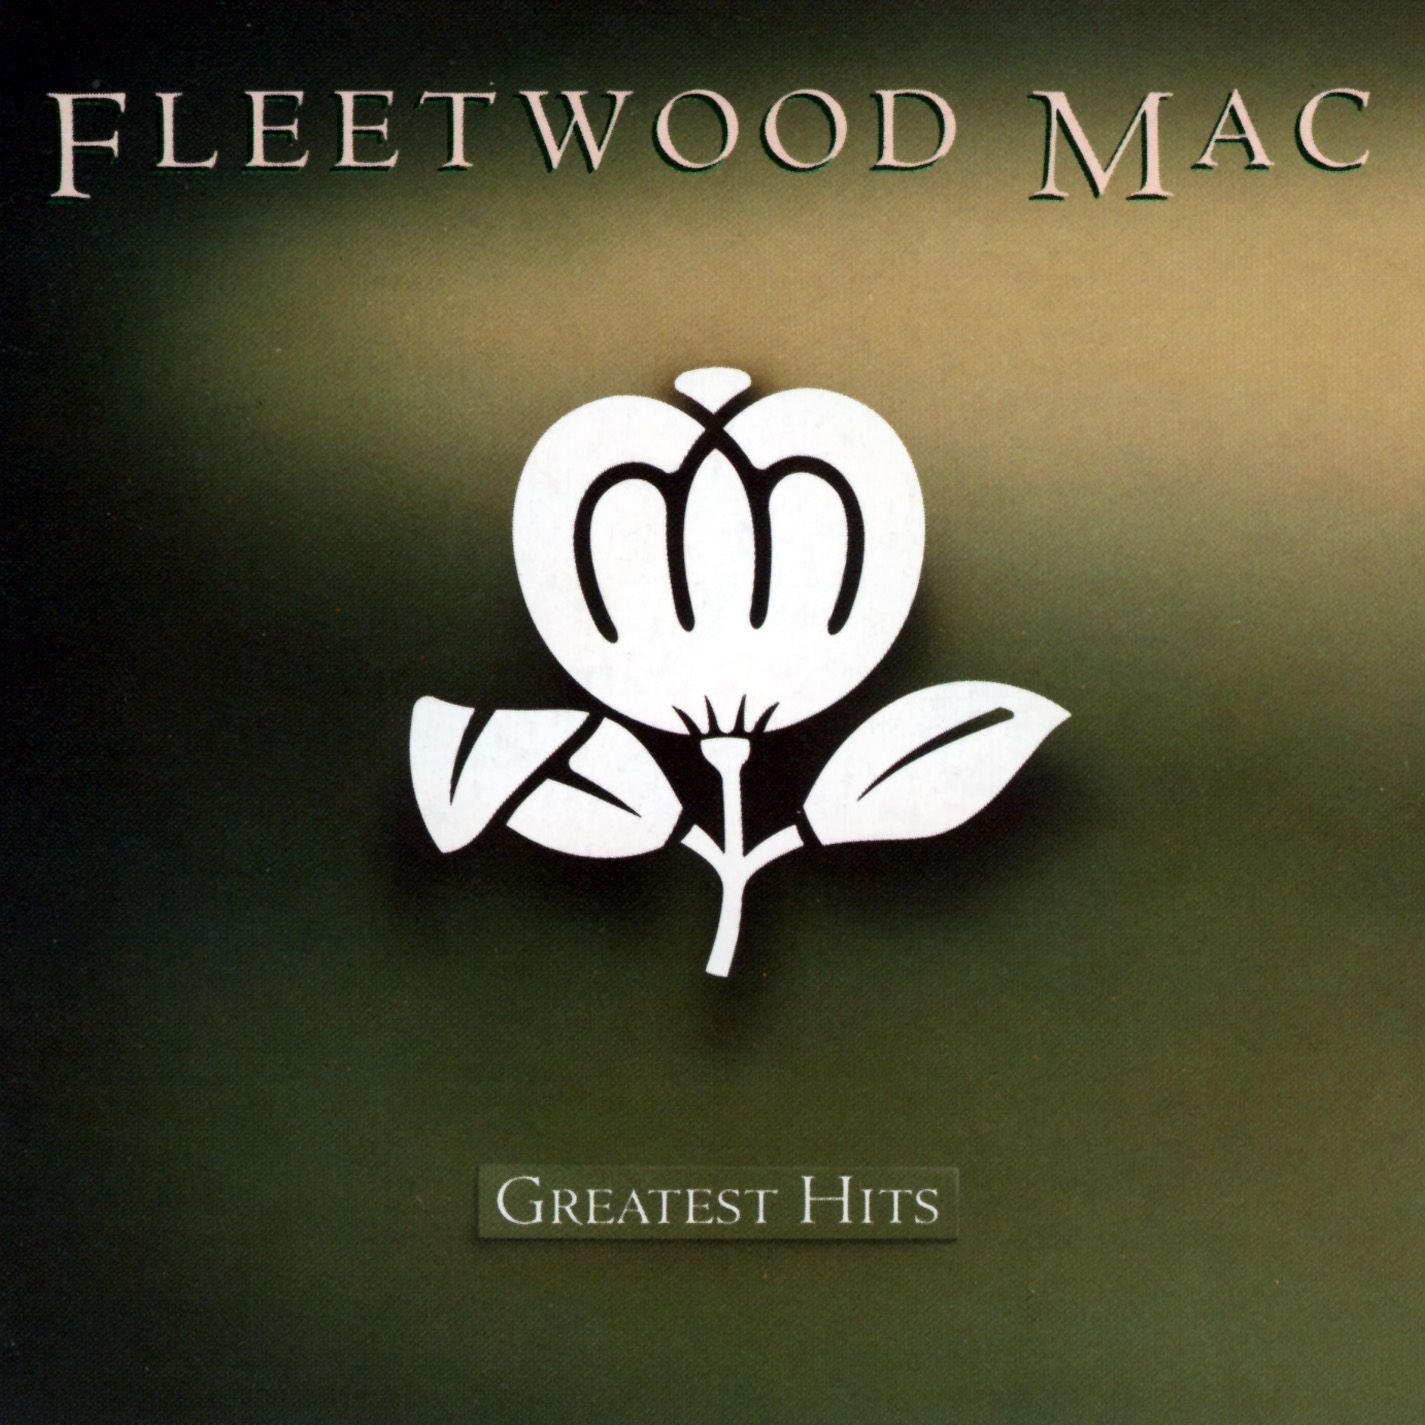 fleetwood mac songs free download